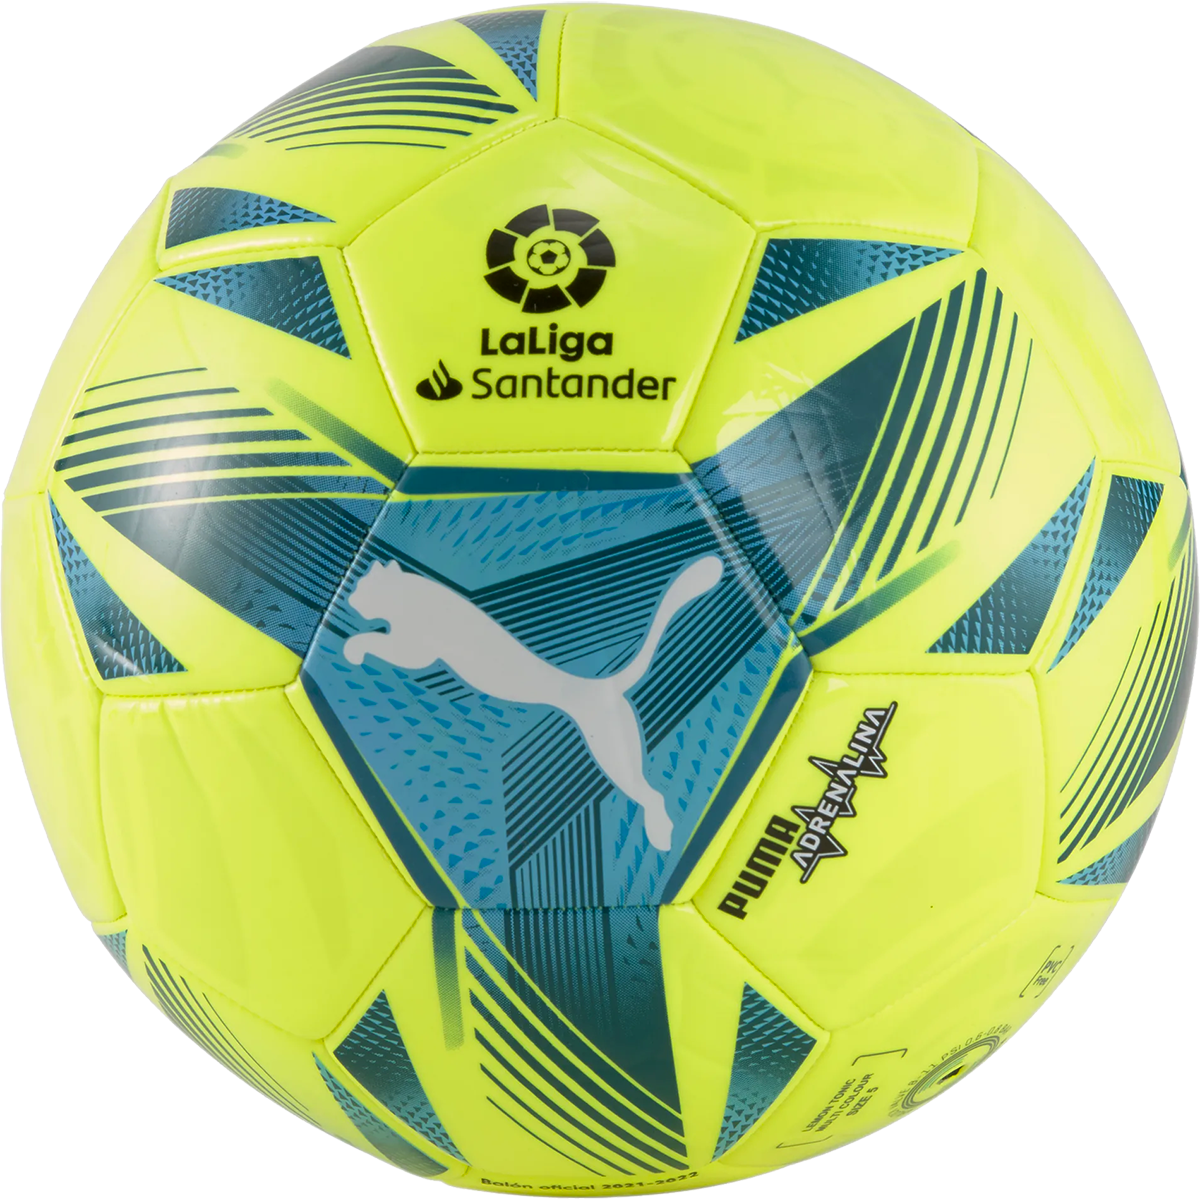 La Liga 1 Adrenalina MS Ball - Size 3 alternate view